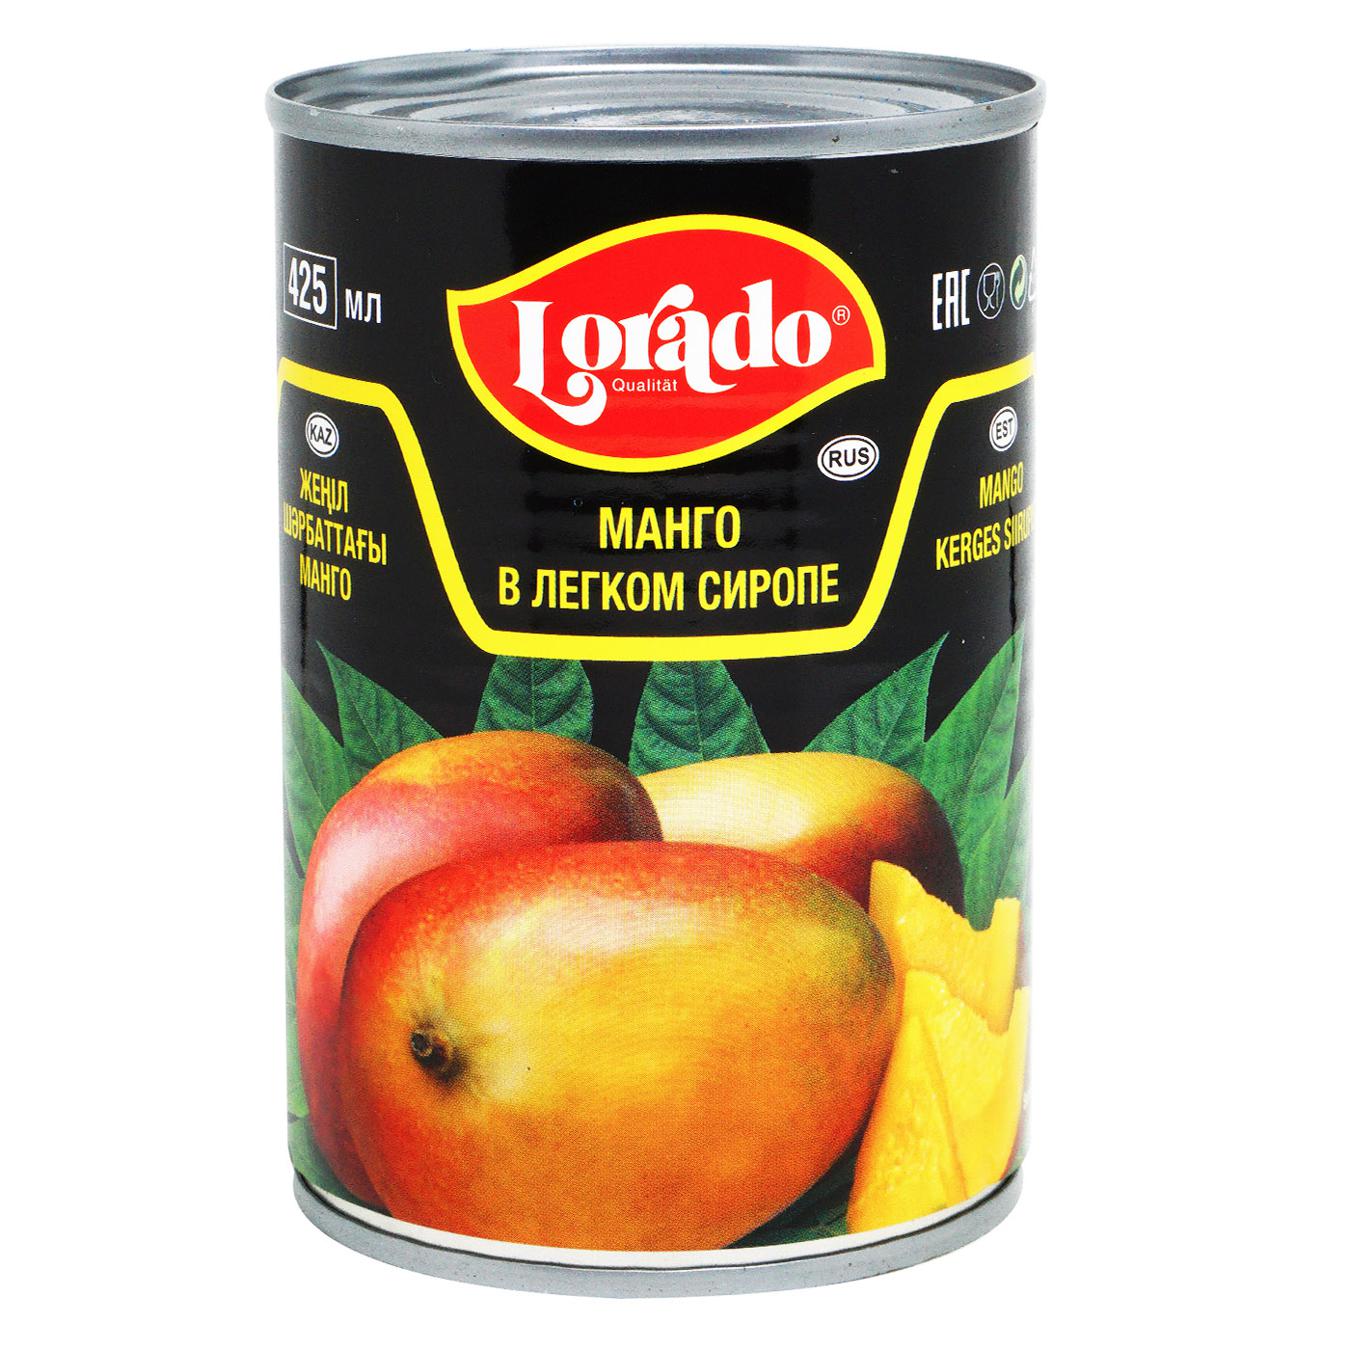 Lorado mango canned in syrup 425 ml